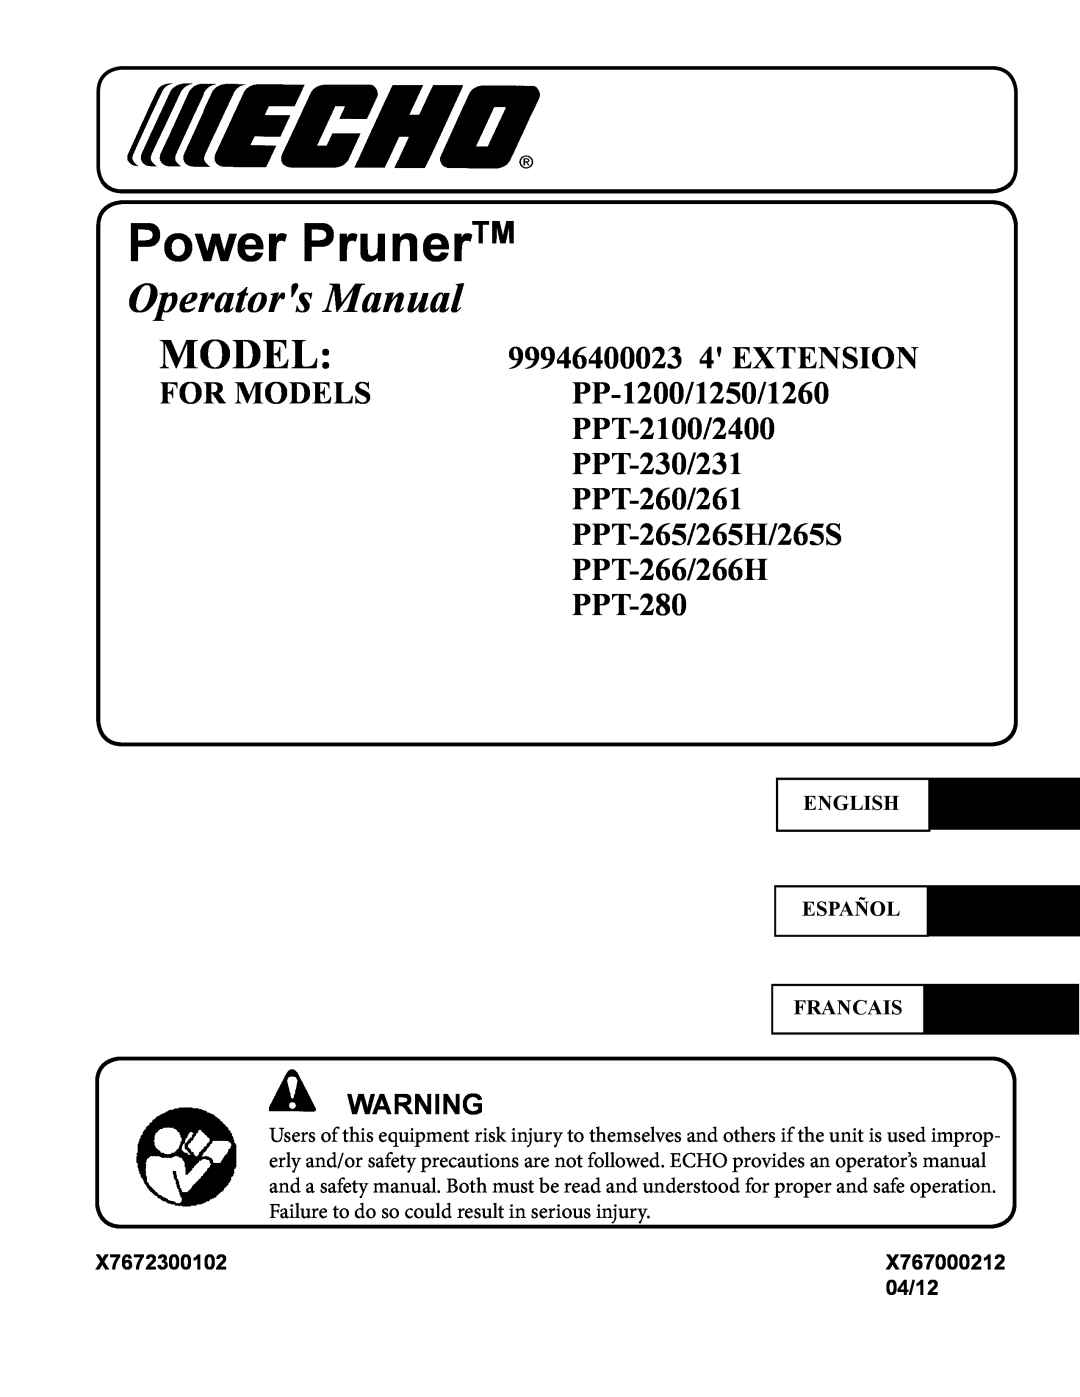 Echo PPT-266/266H manual X7672300102, 04/12, Power PrunerTM, Operators Manual, MODEL 99946400023 4 EXTENSION 